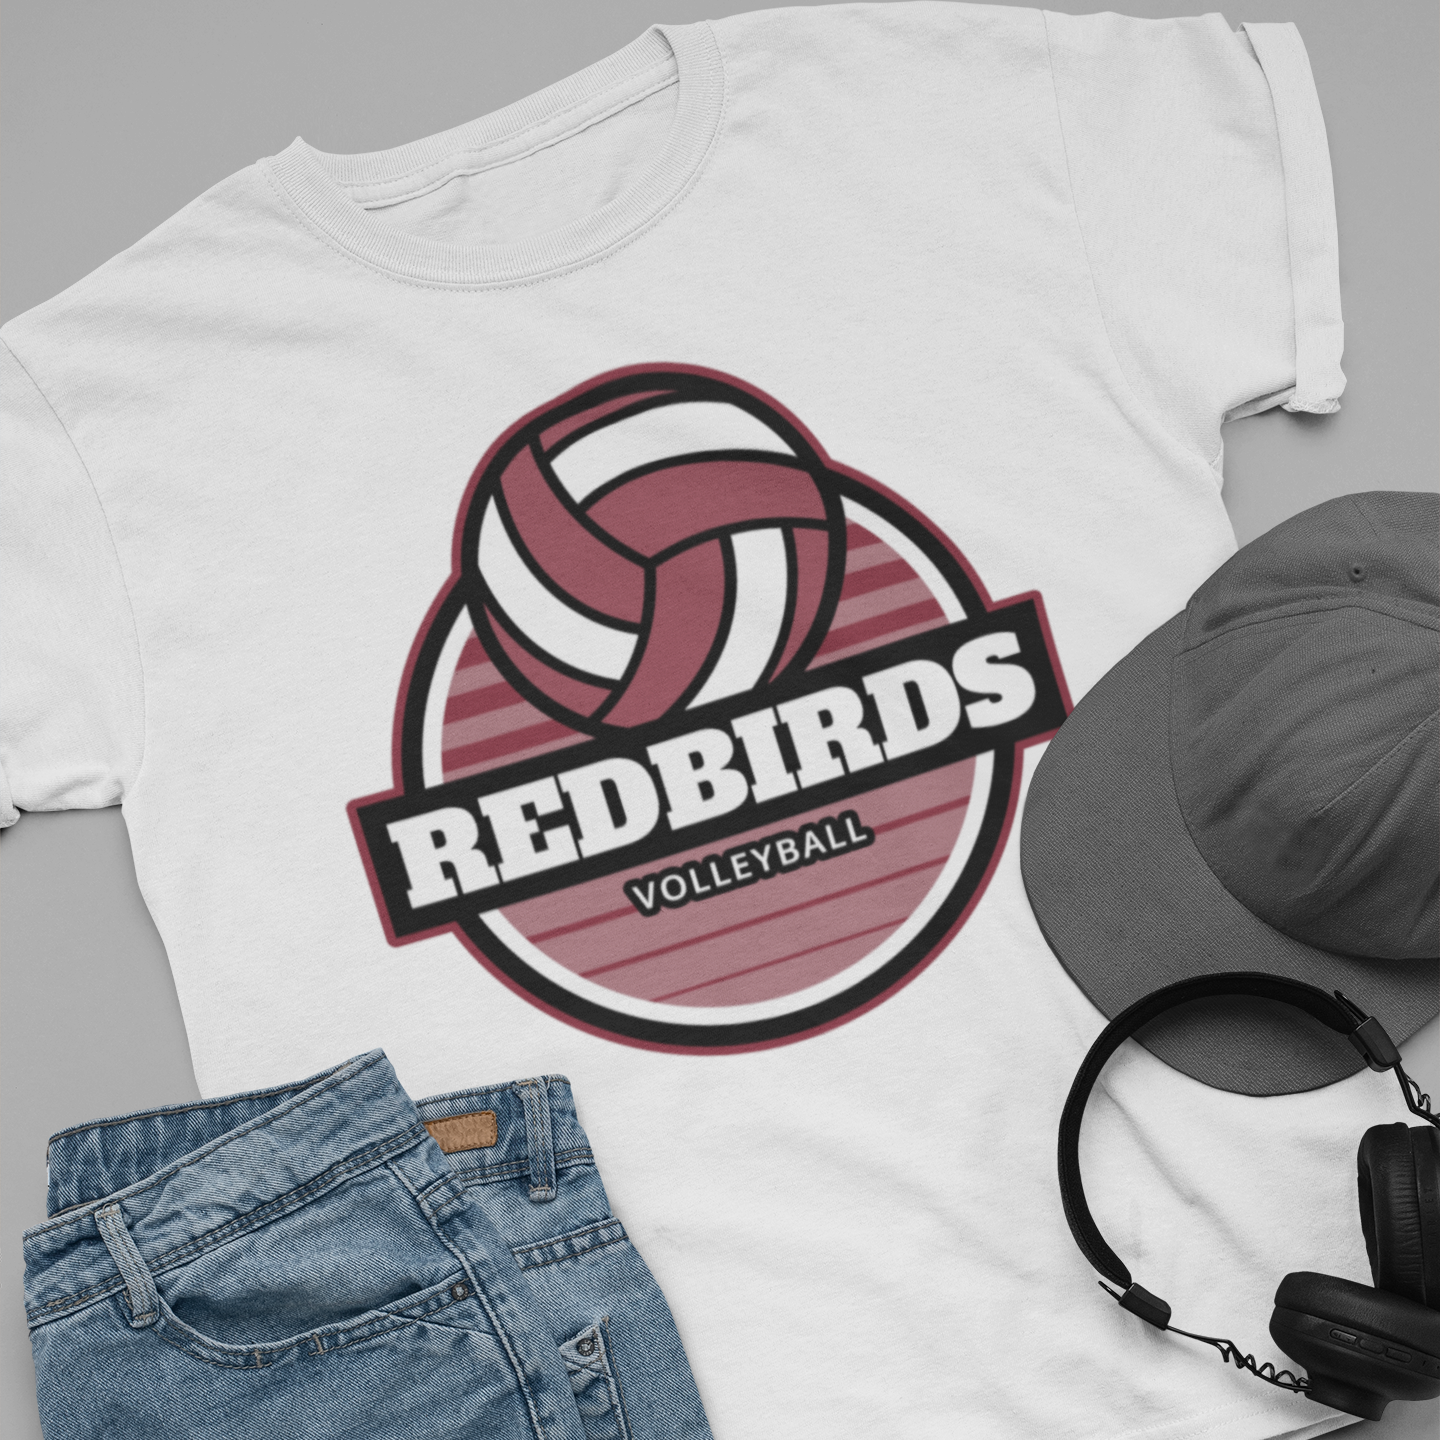 De Pere Redbirds Volleyball - Crewneck Sweatshirt or tee shirt